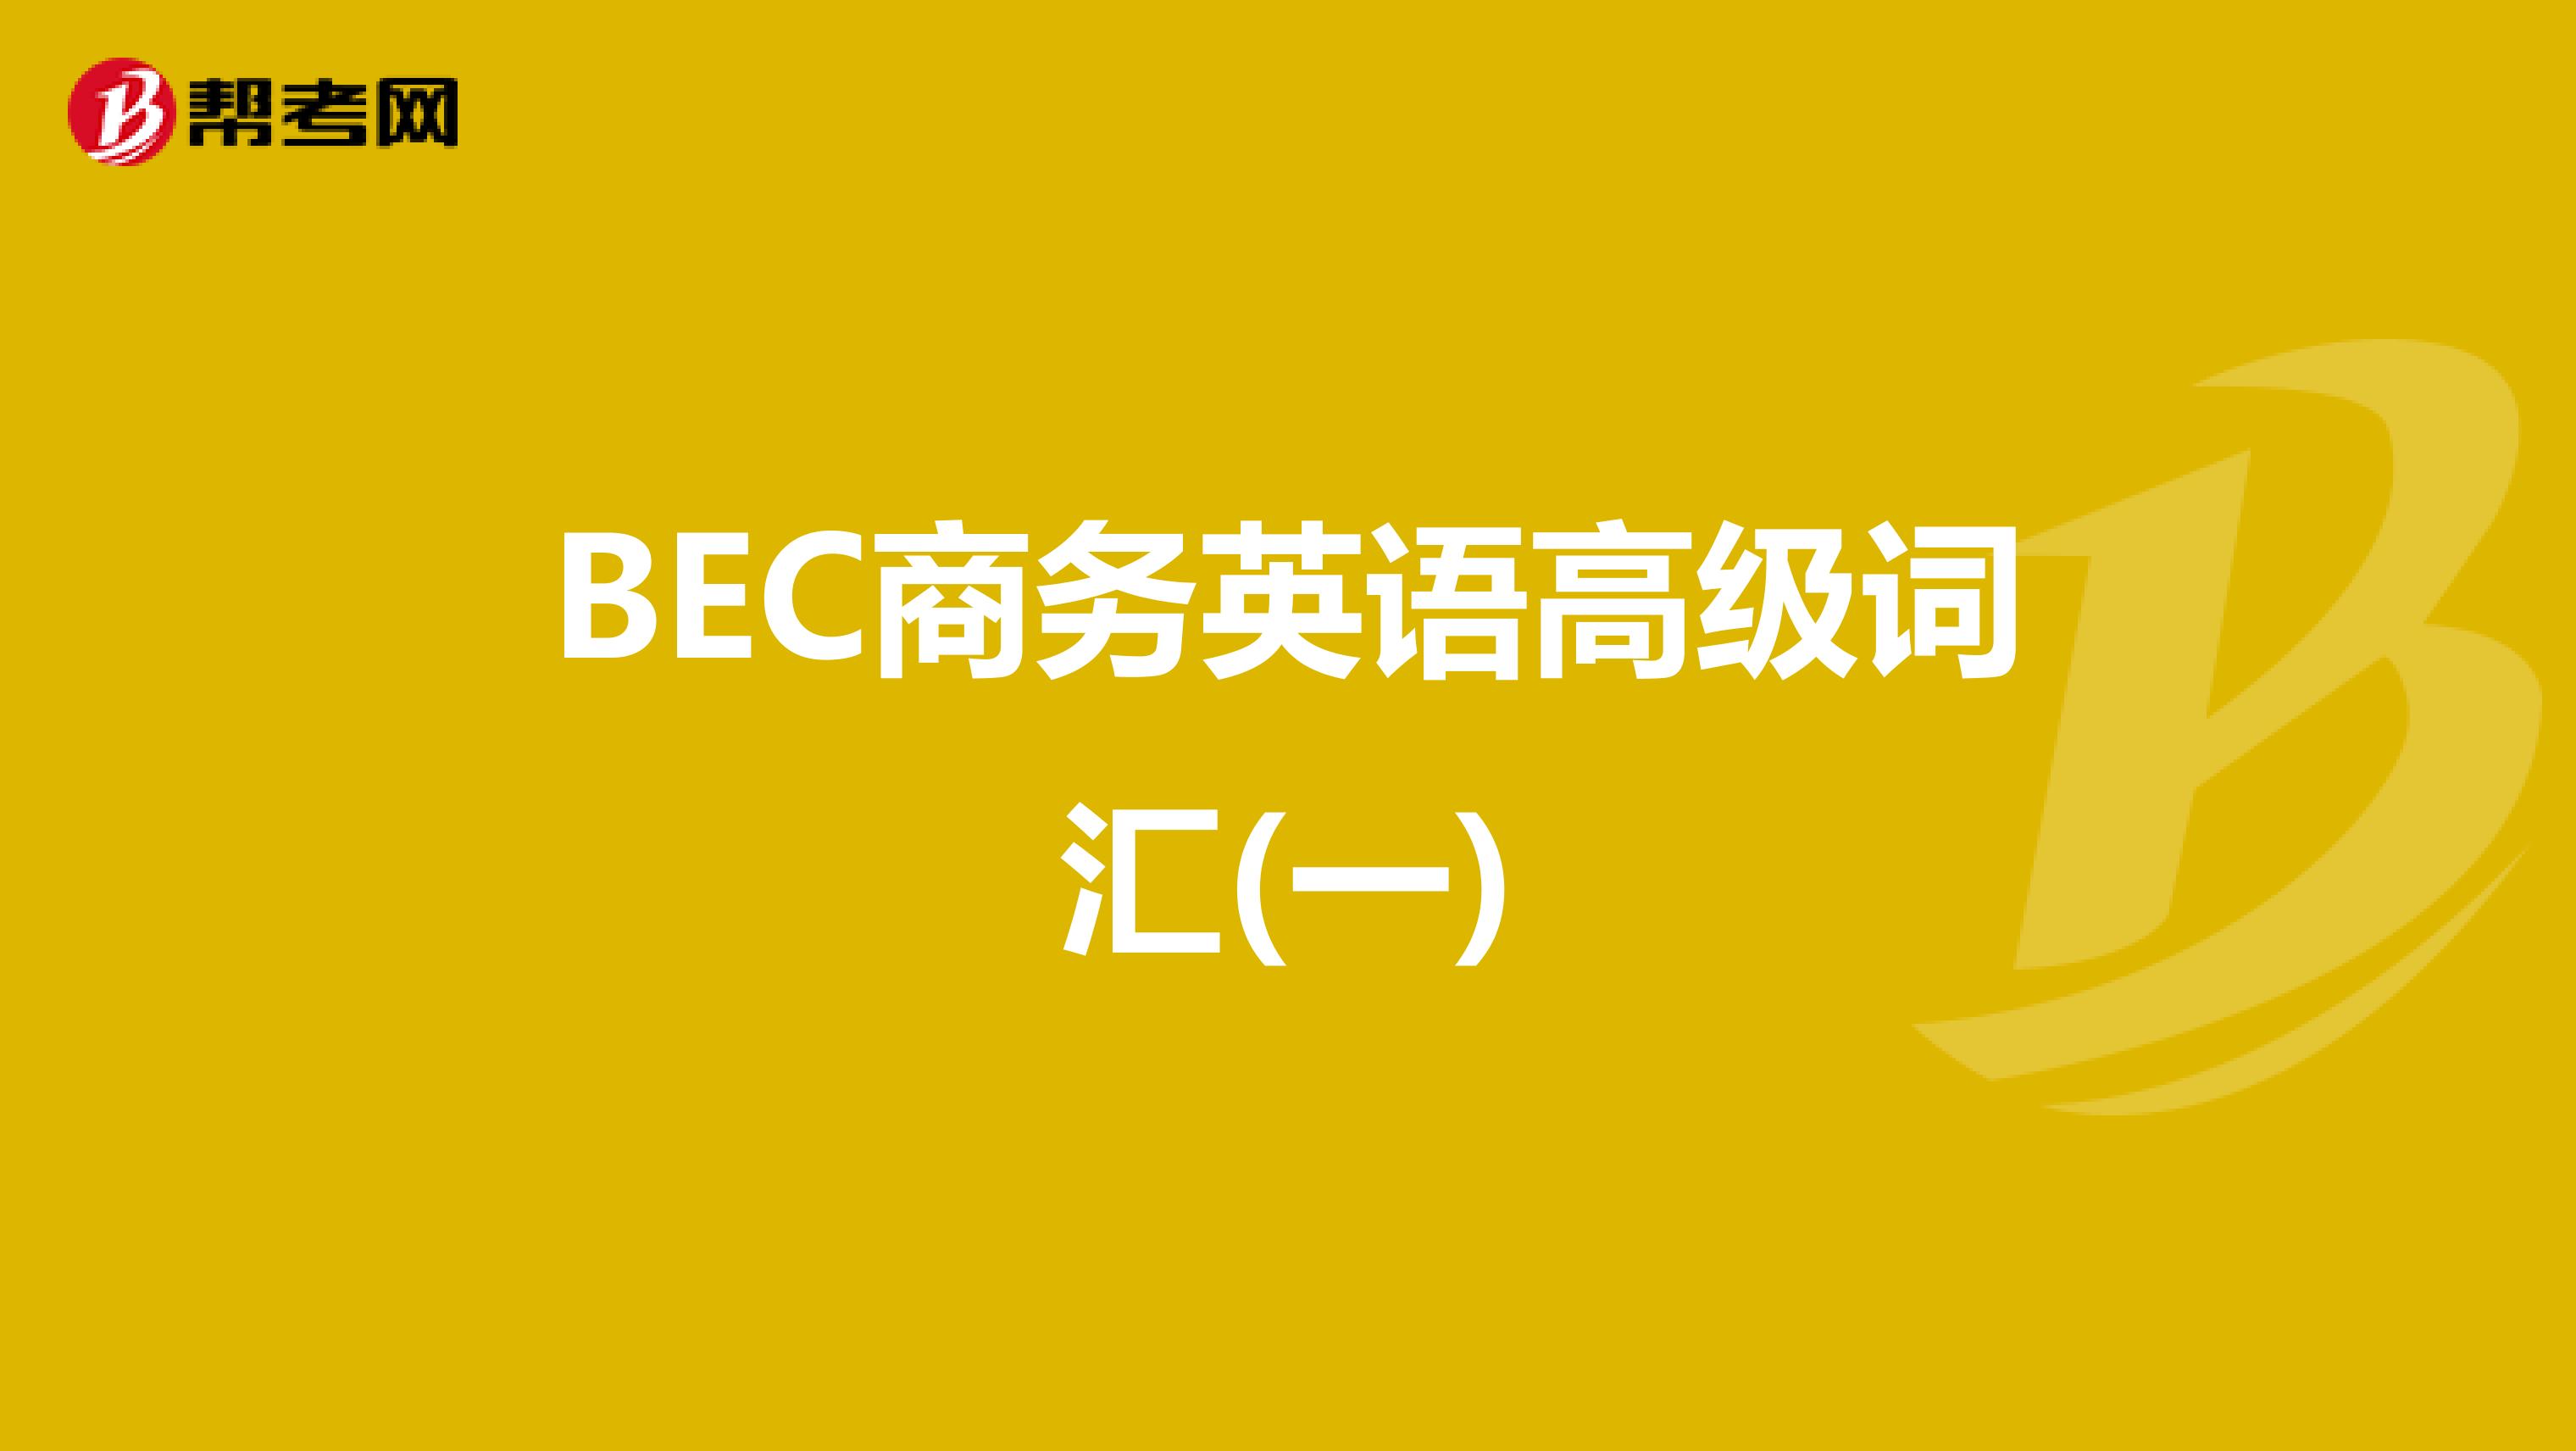 BEC商务英语高级词汇(一)